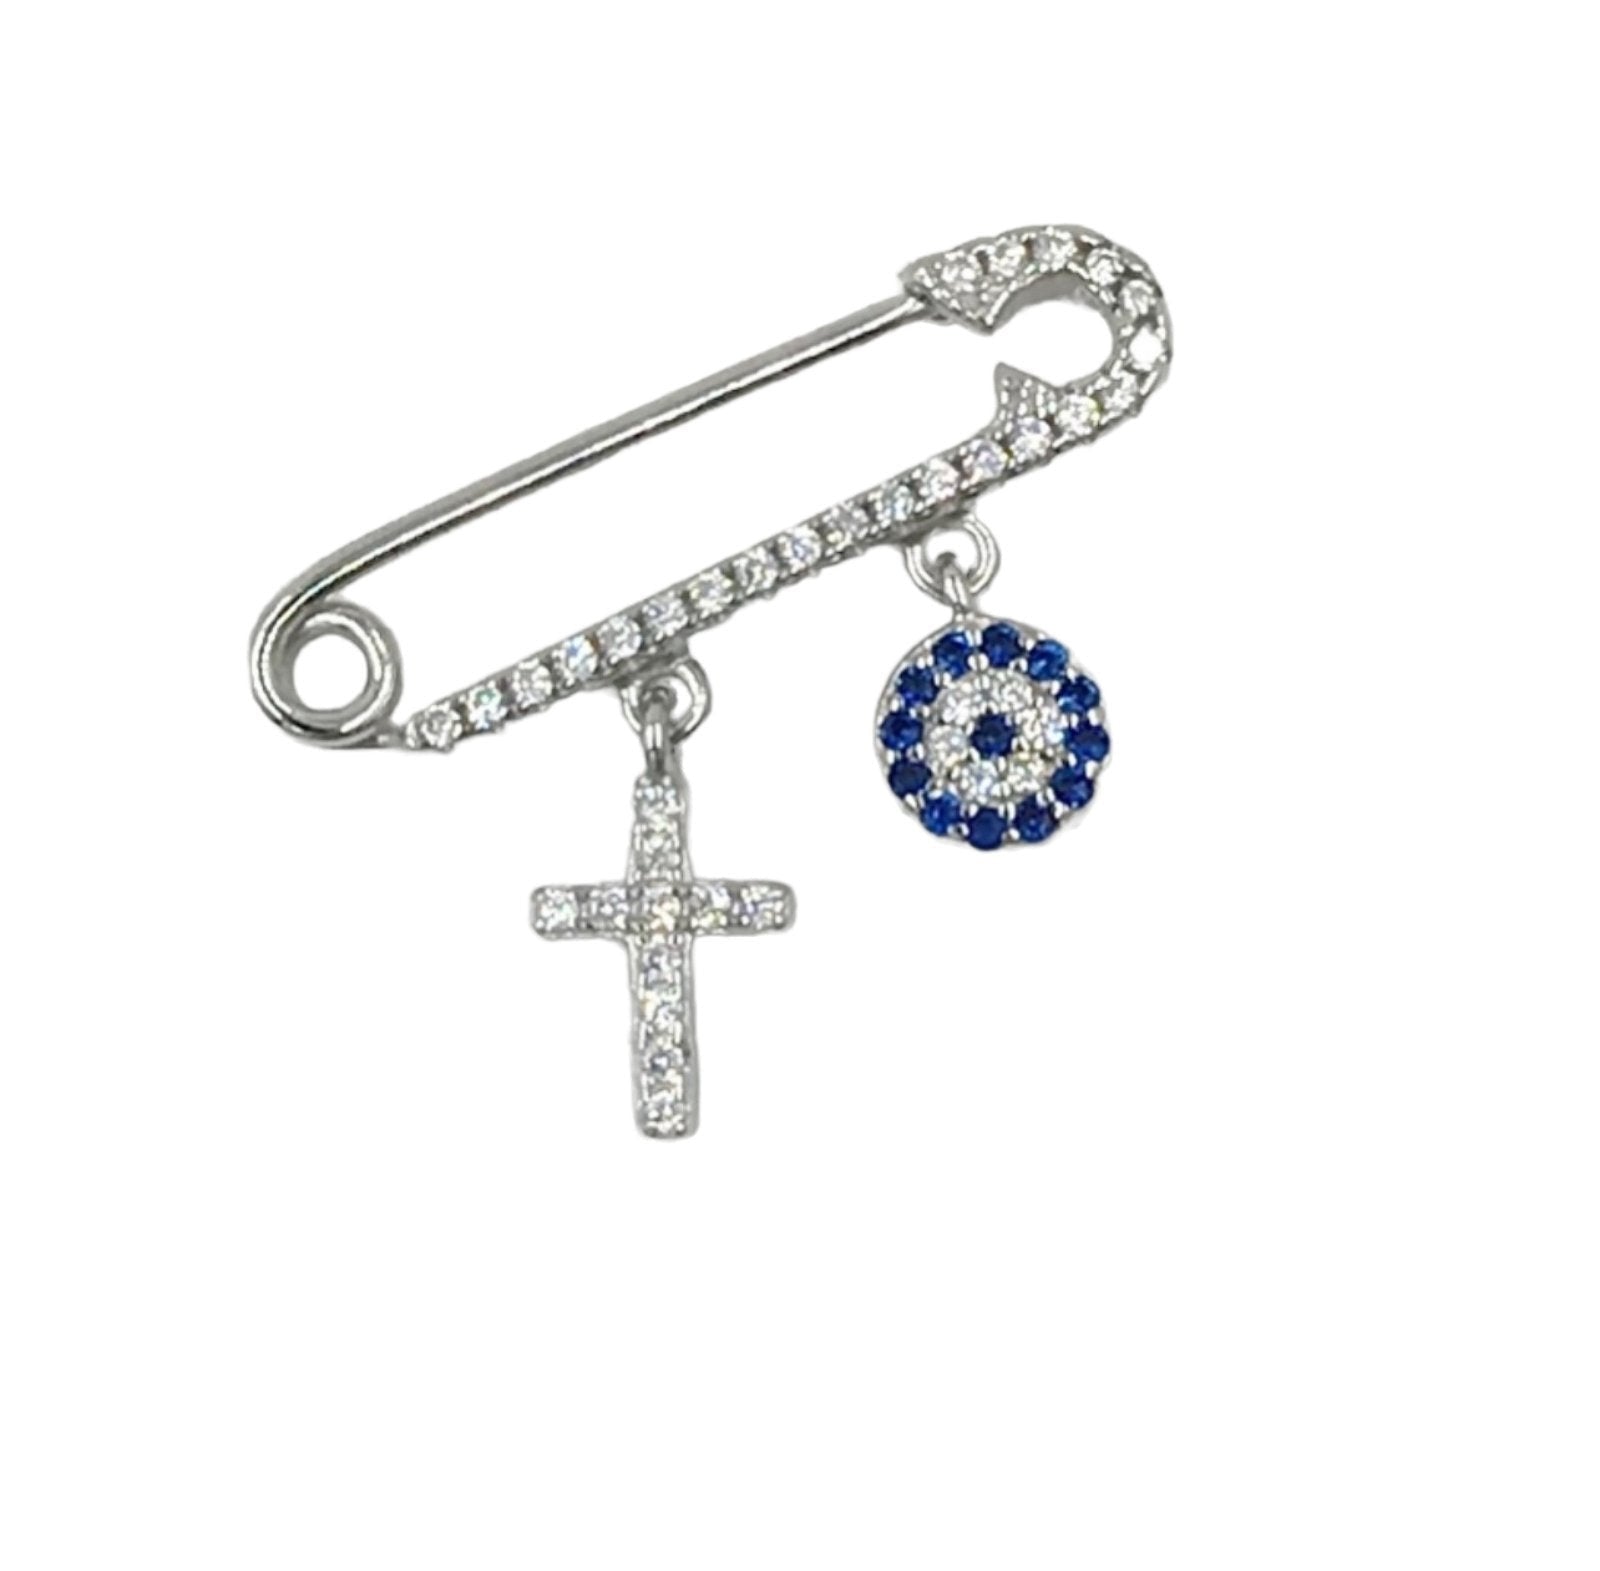 Sterling Silver Cross and Evil Eye Brooch Pin